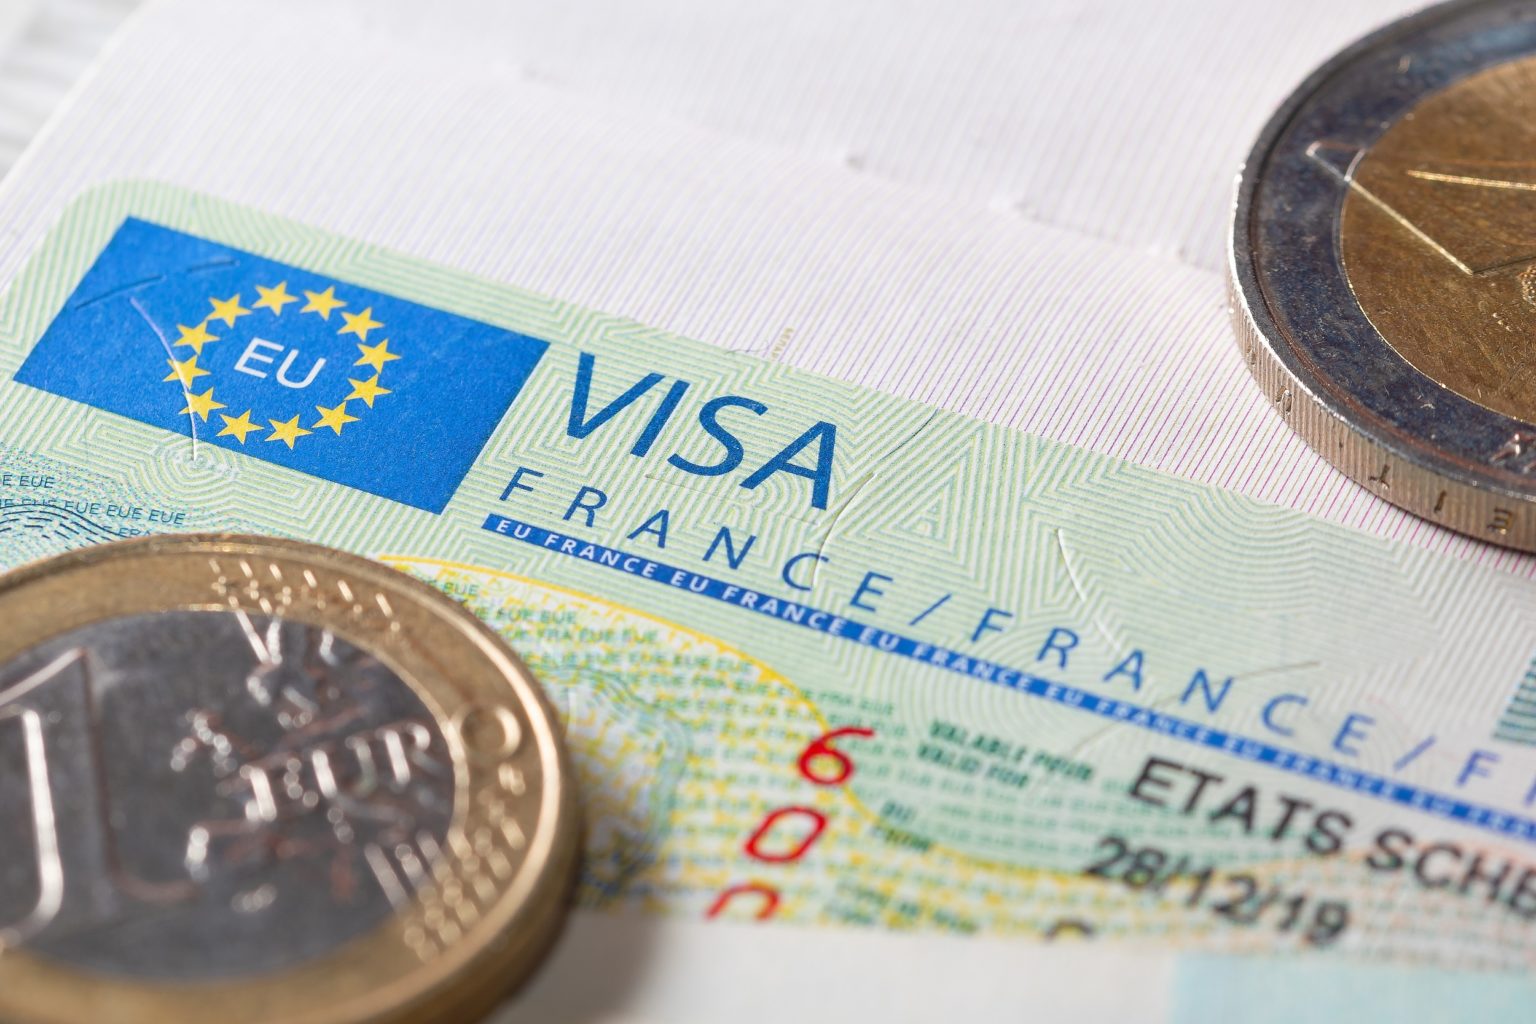 France Visa